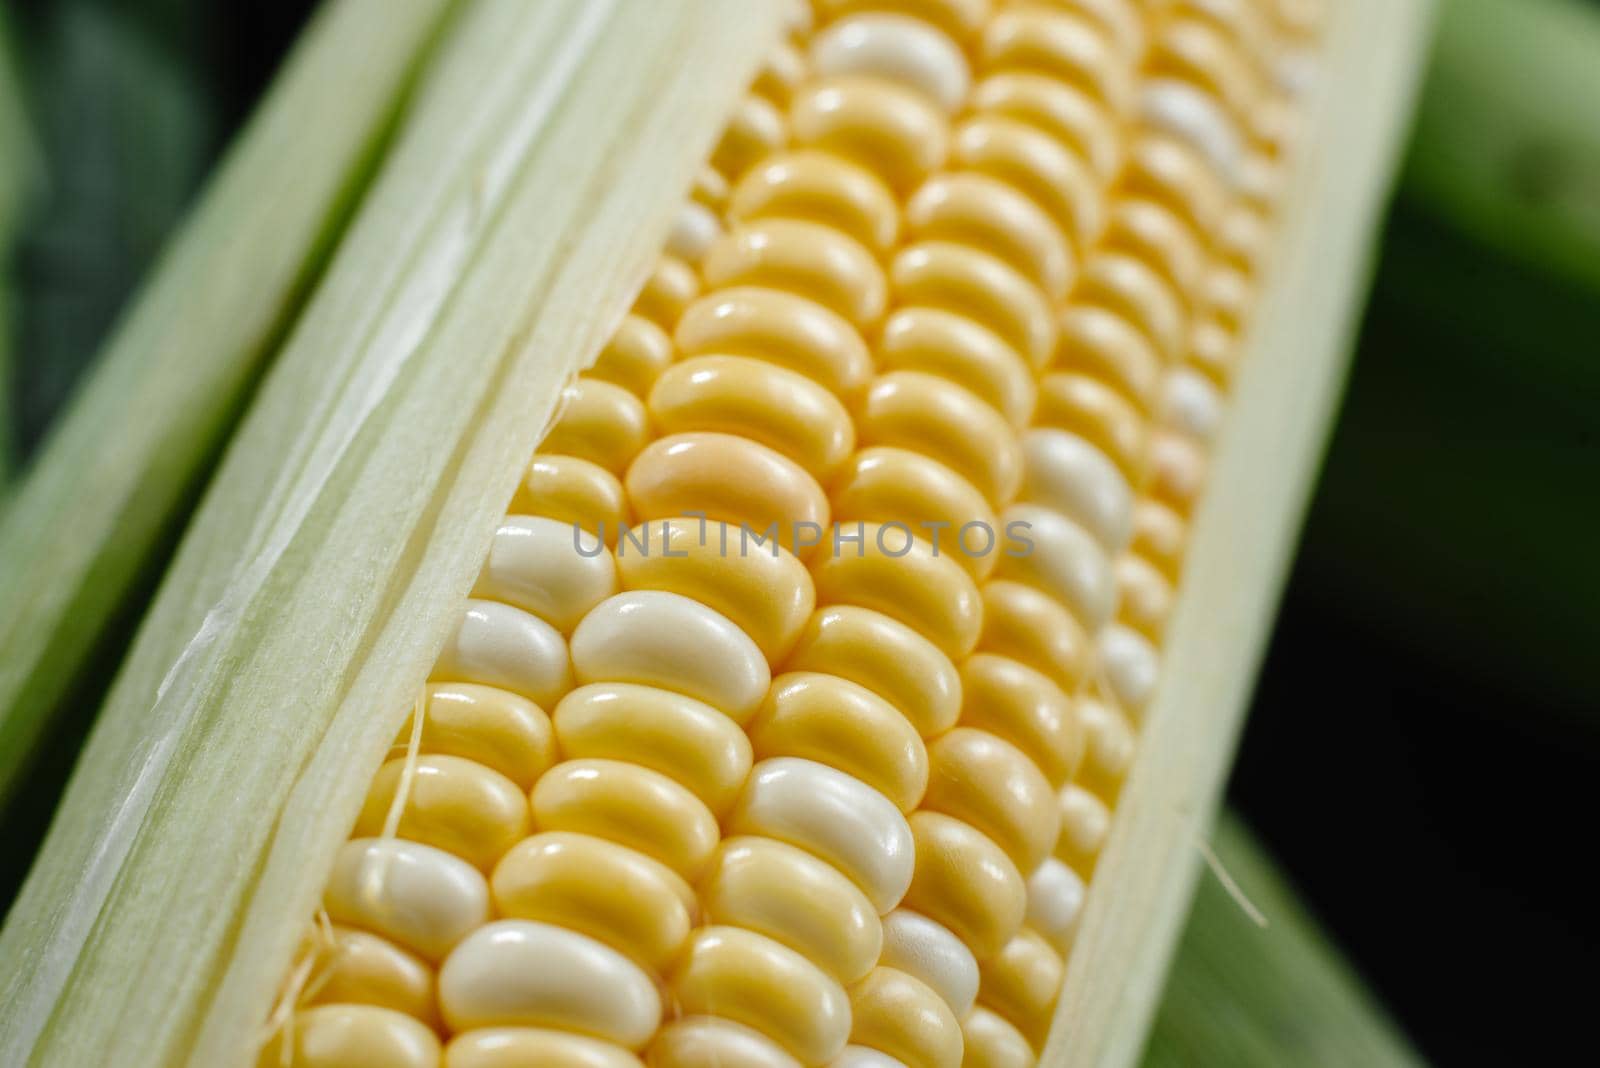 Raw corn on a dark background. Corn cobs in leafy green by gulyaevstudio